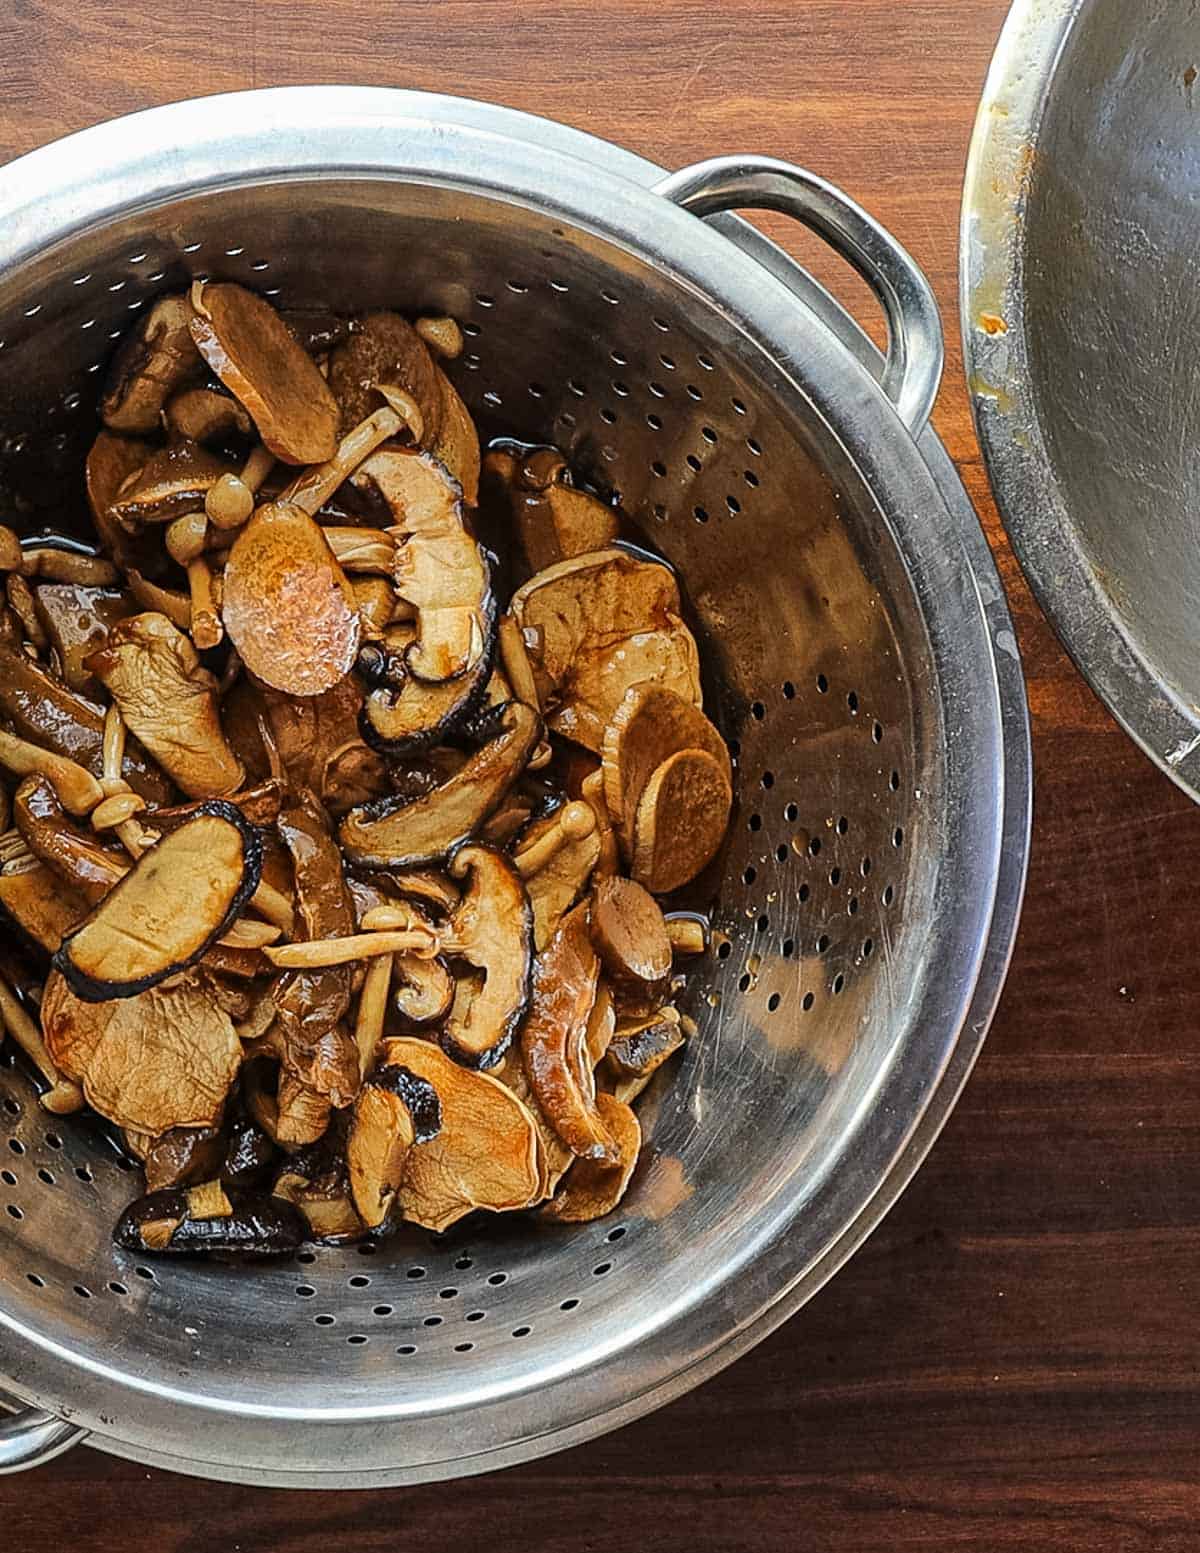 Draining marinated mushrooms in a colander. 